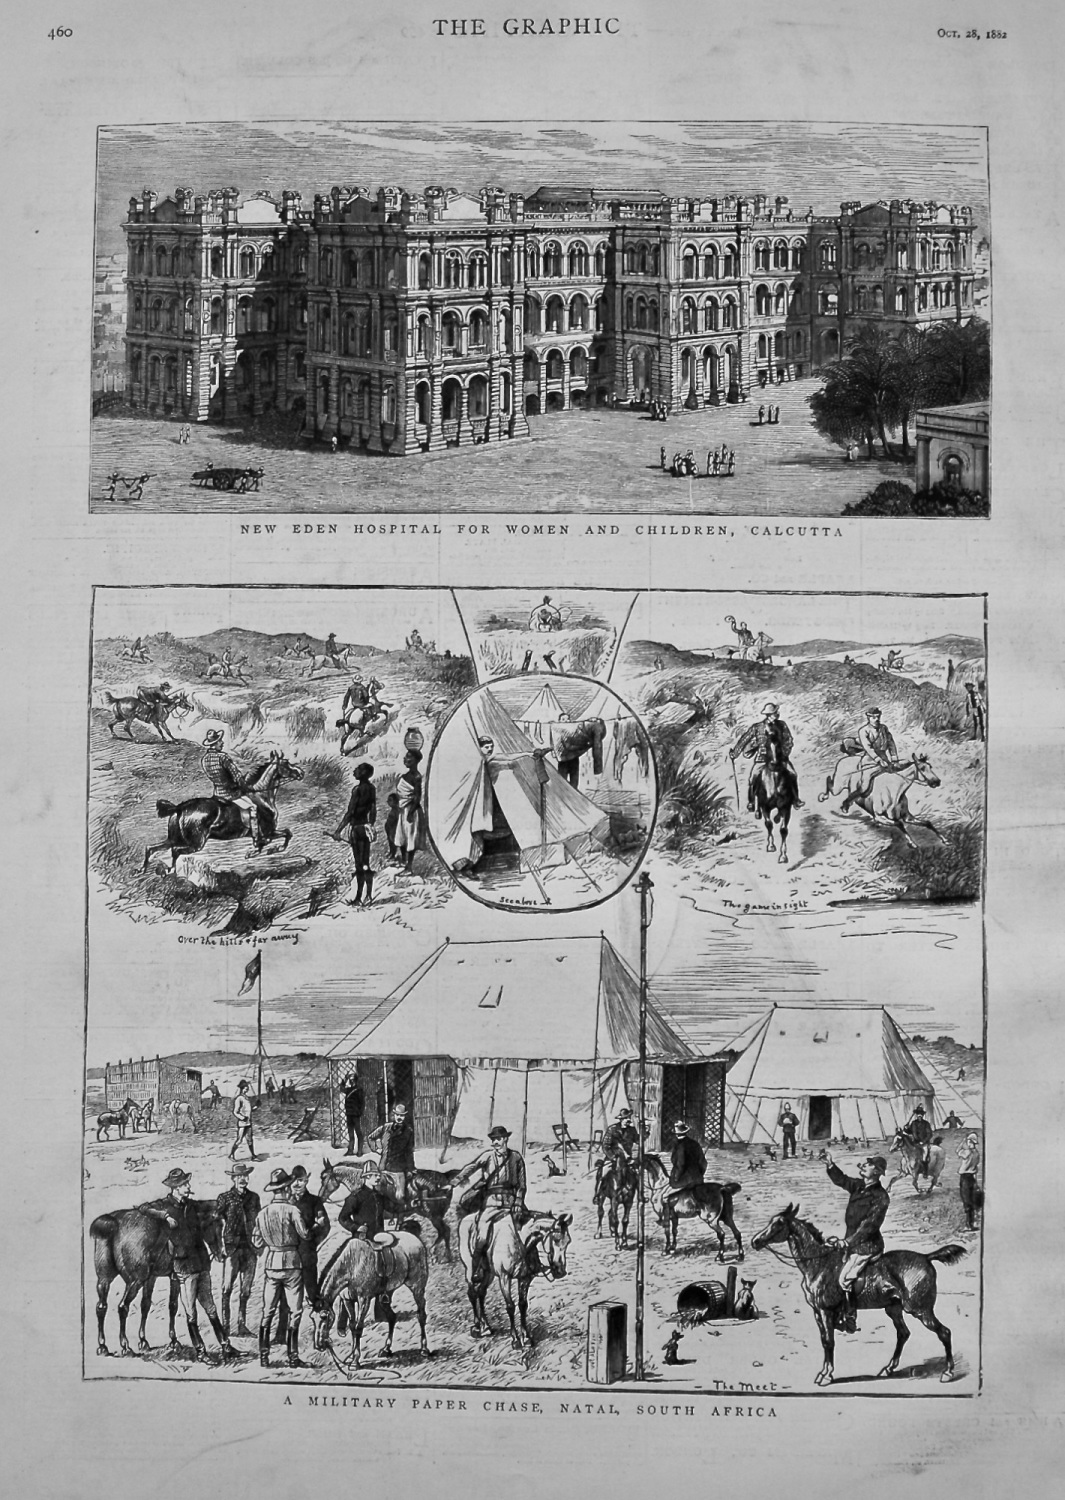 New Eden Hospital For Women and Children, Calcutta. 1882